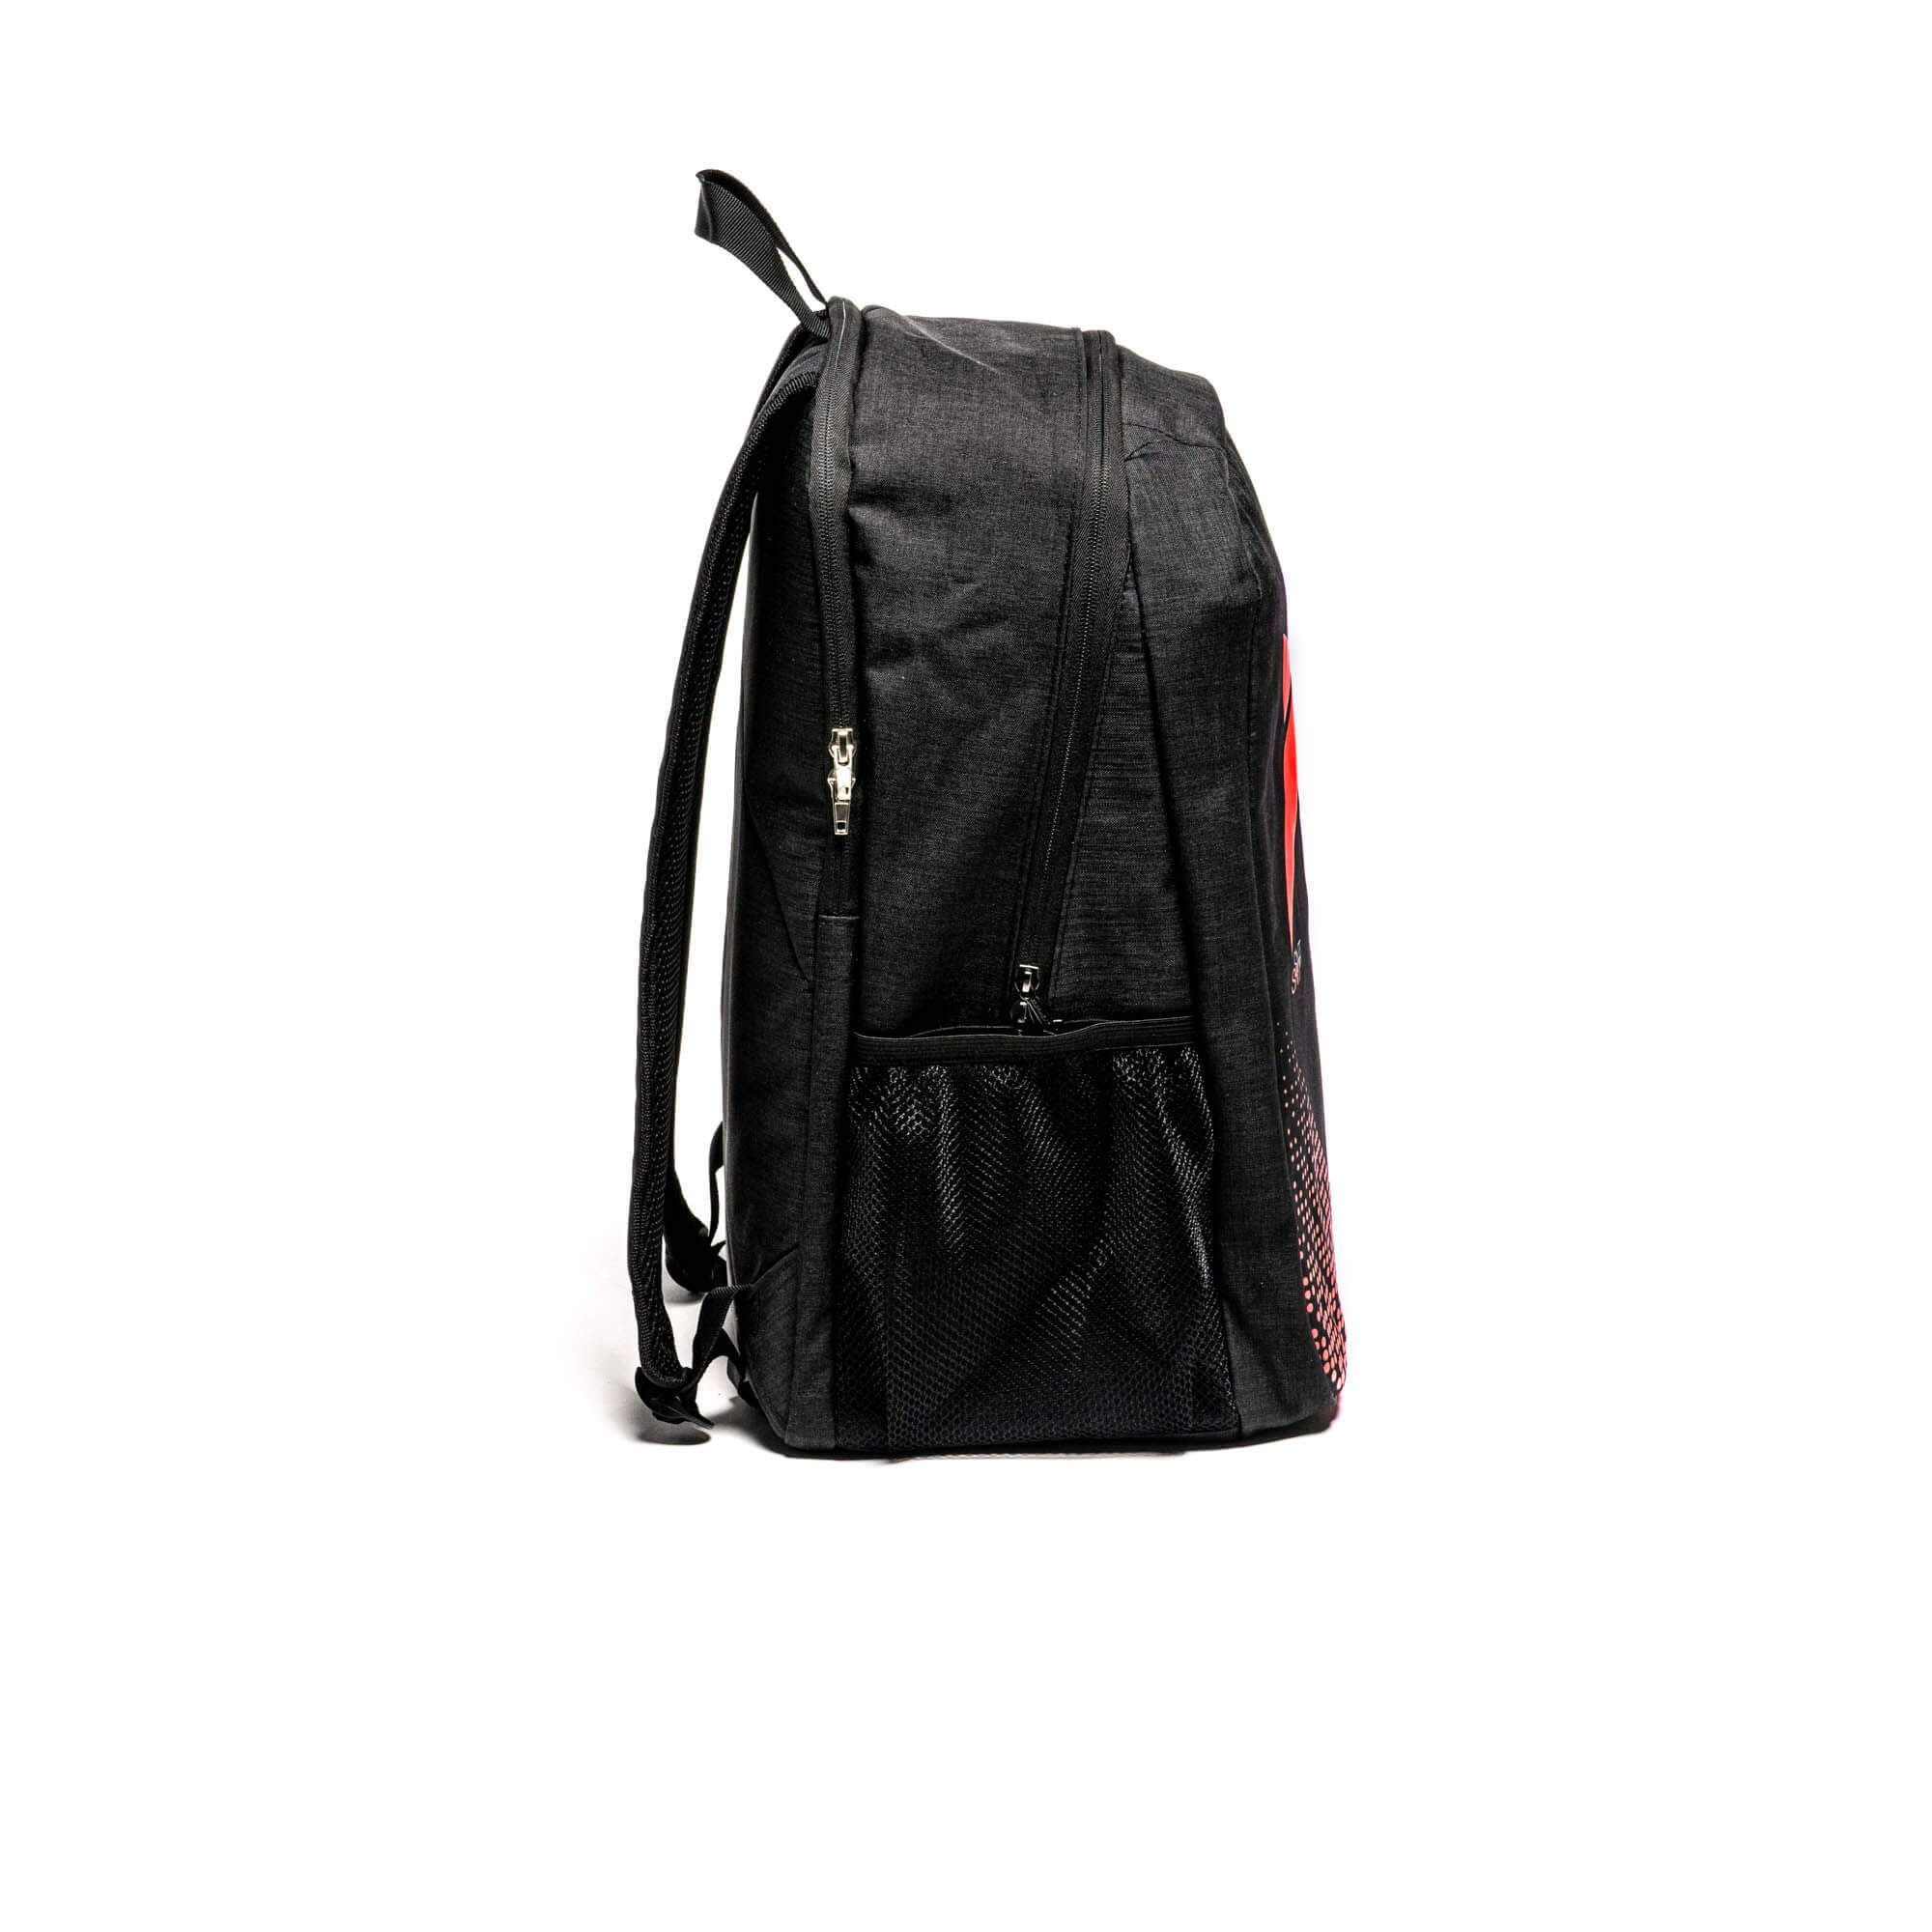 drop shot padel backpack essential red